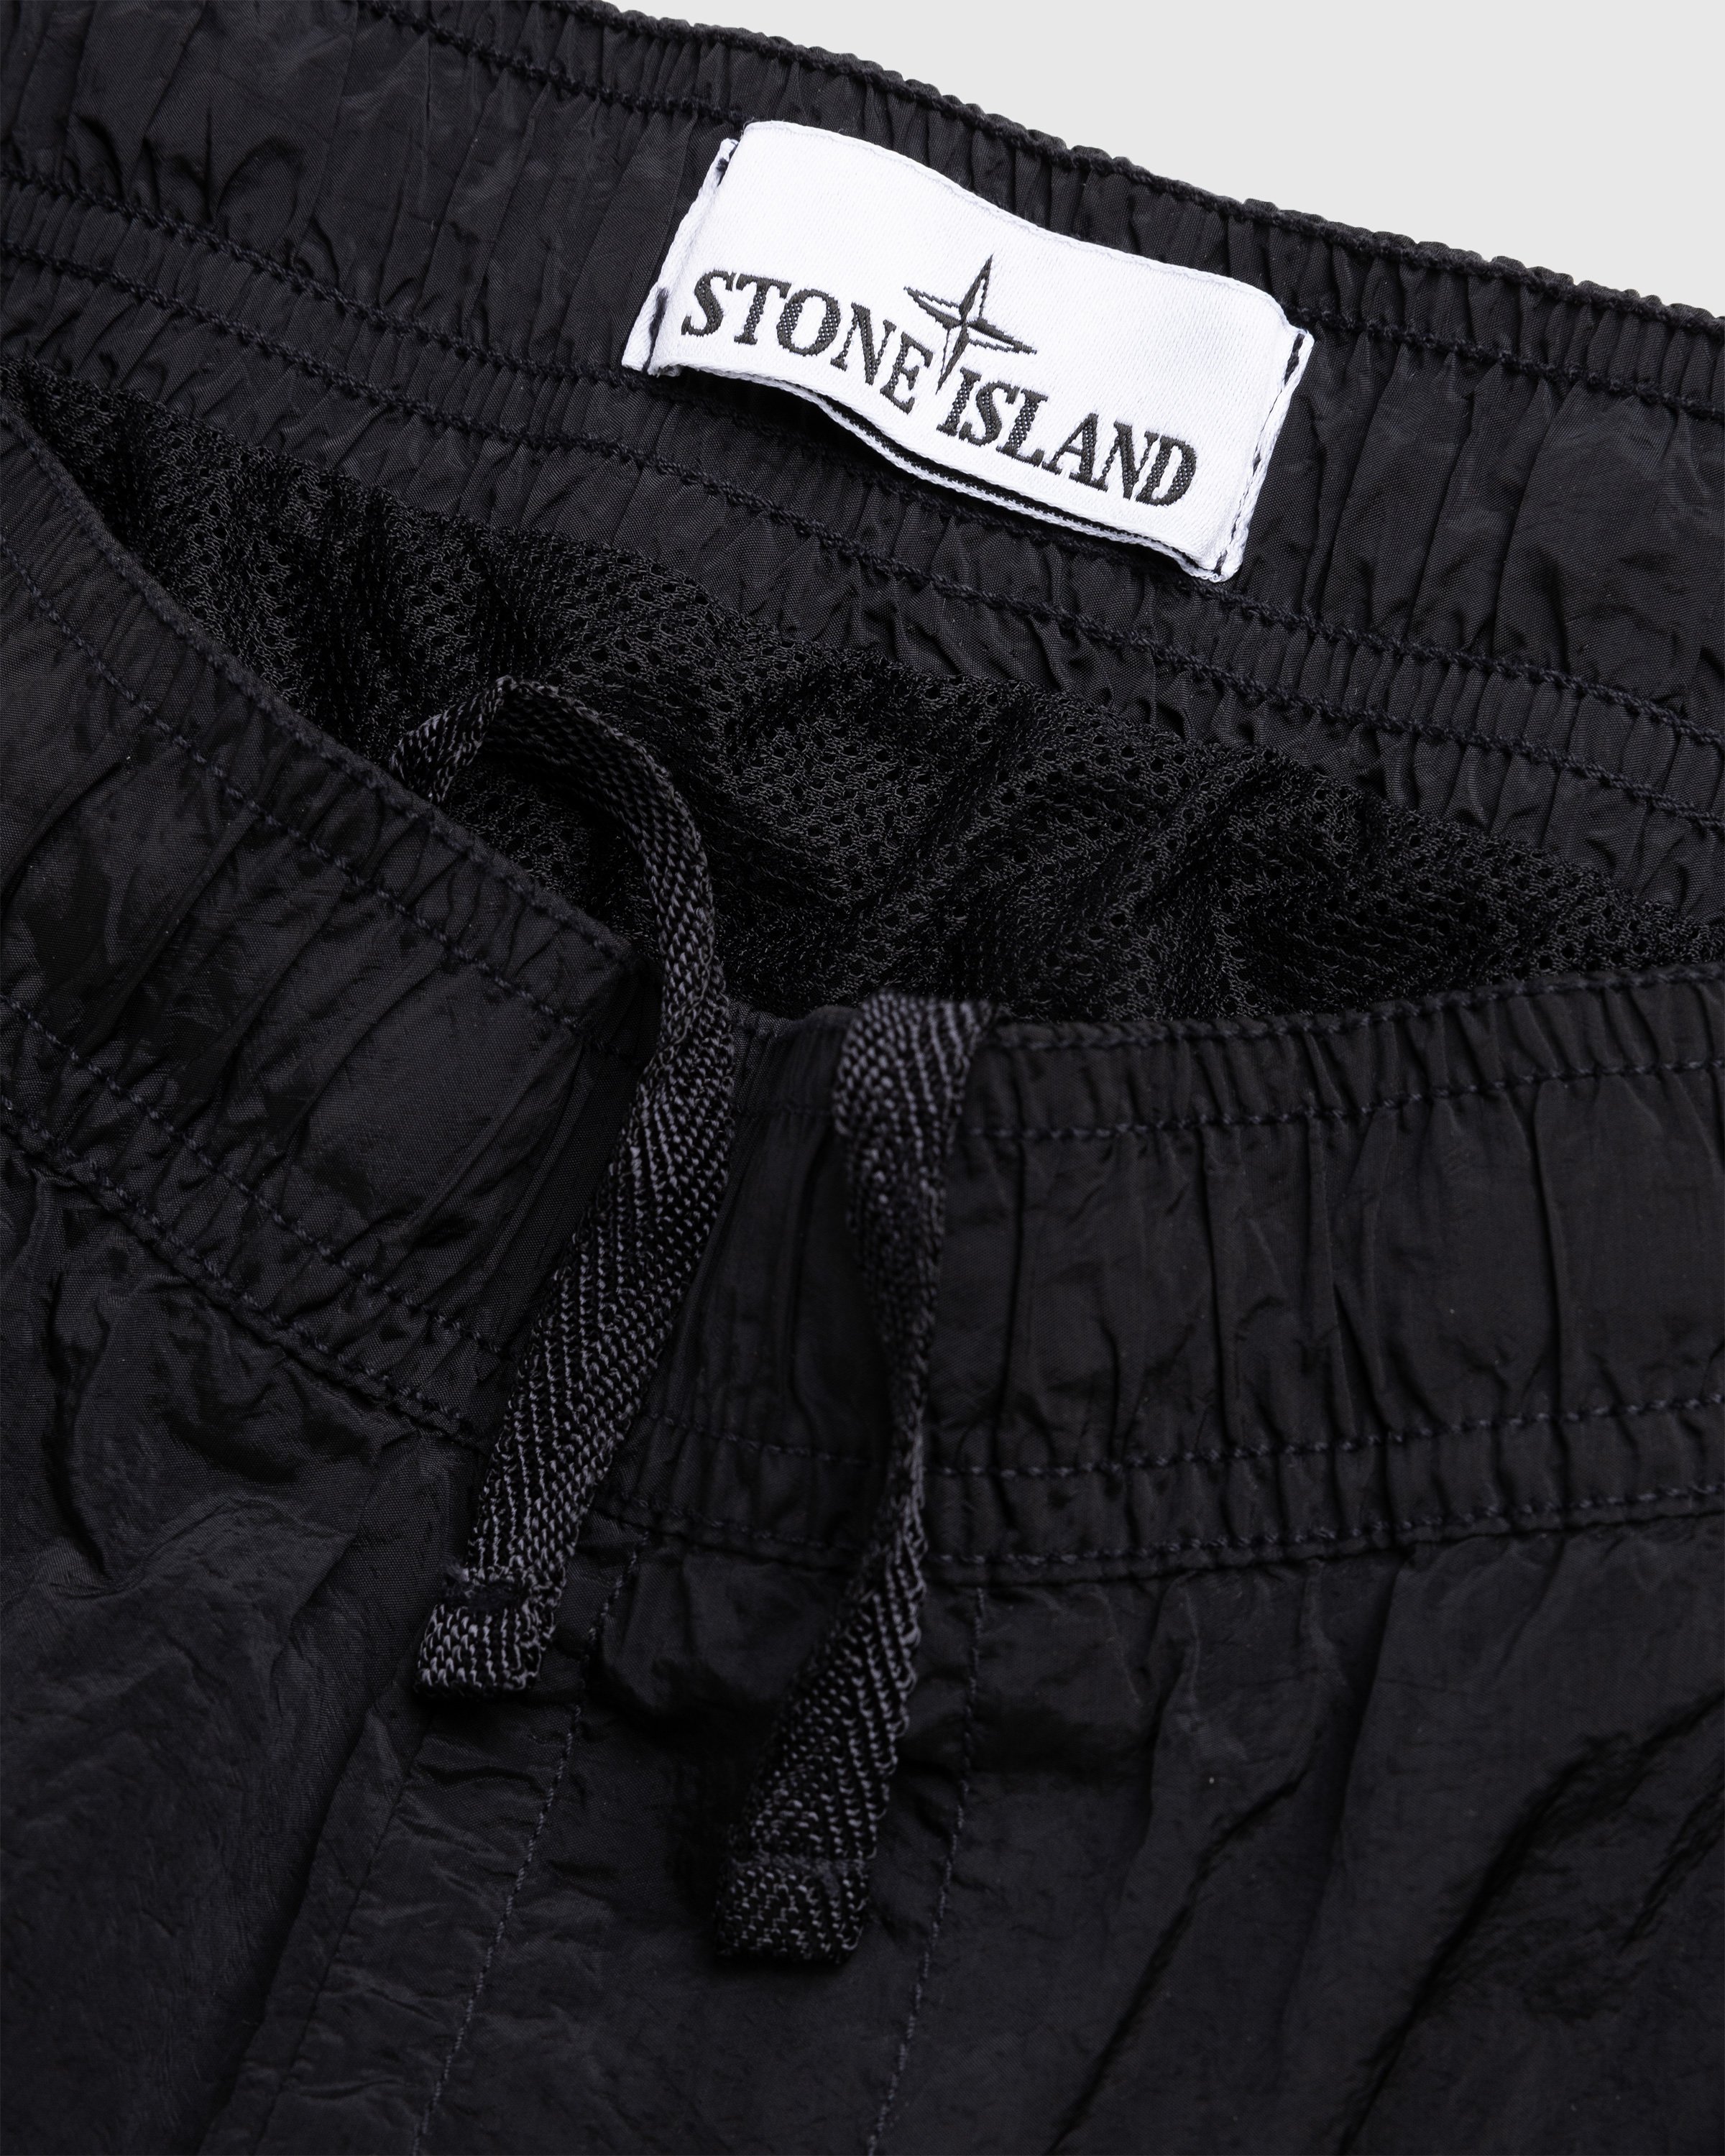 Stone Island - Nylon Metal Beach Shorts Black - Clothing - Black - Image 5